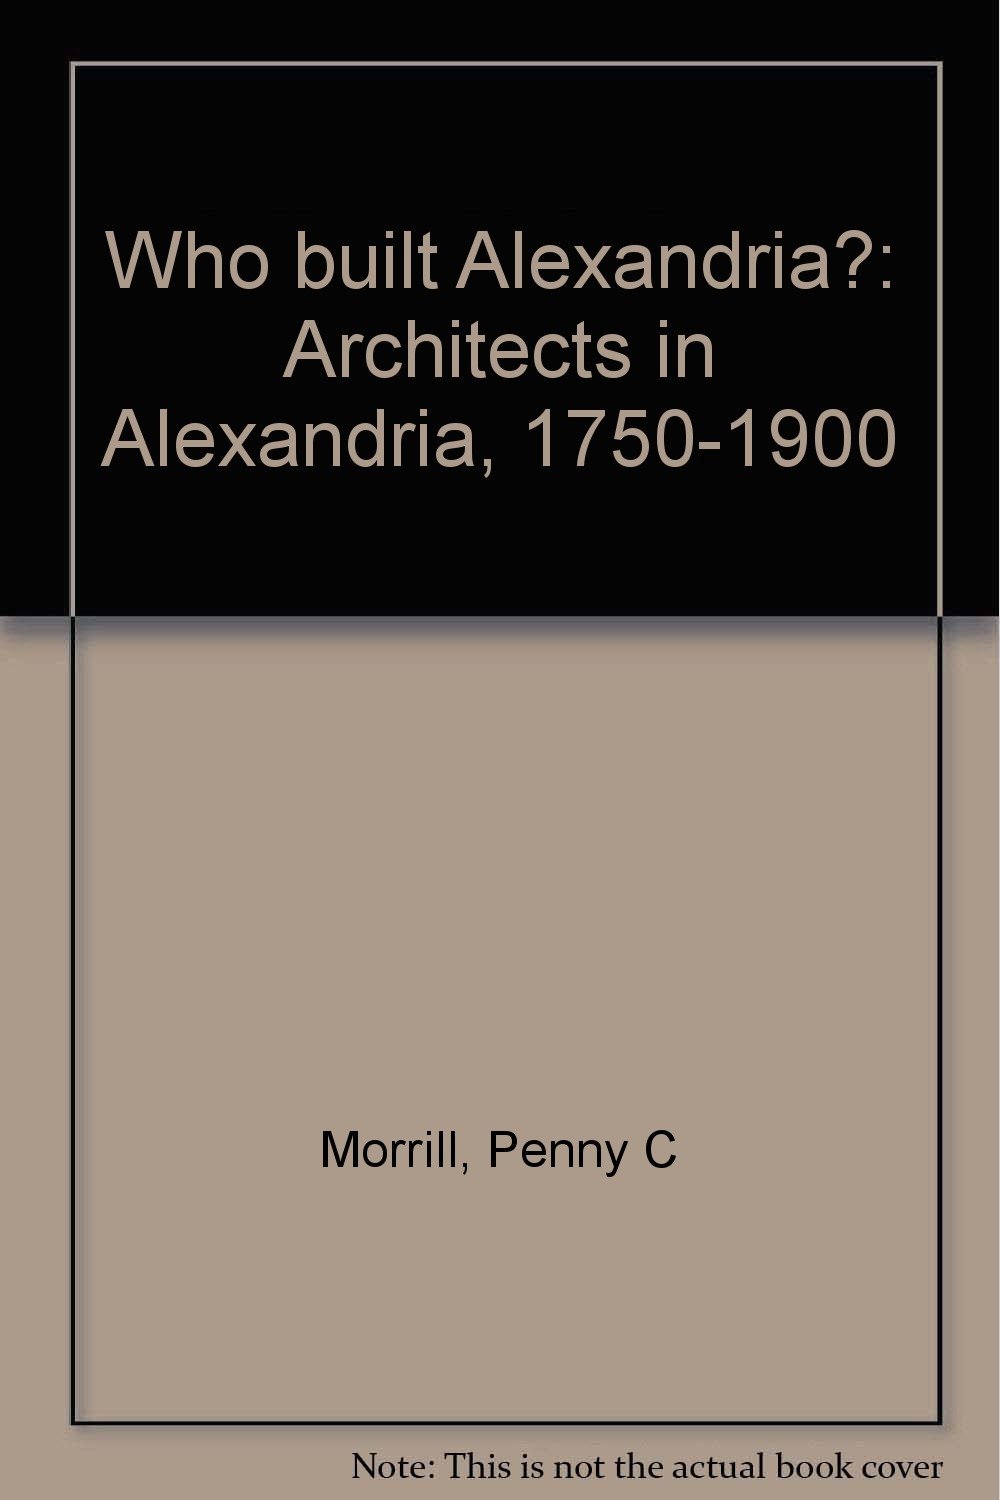 Who built Alexandria? : Architects in Alexandria, 1750-1900